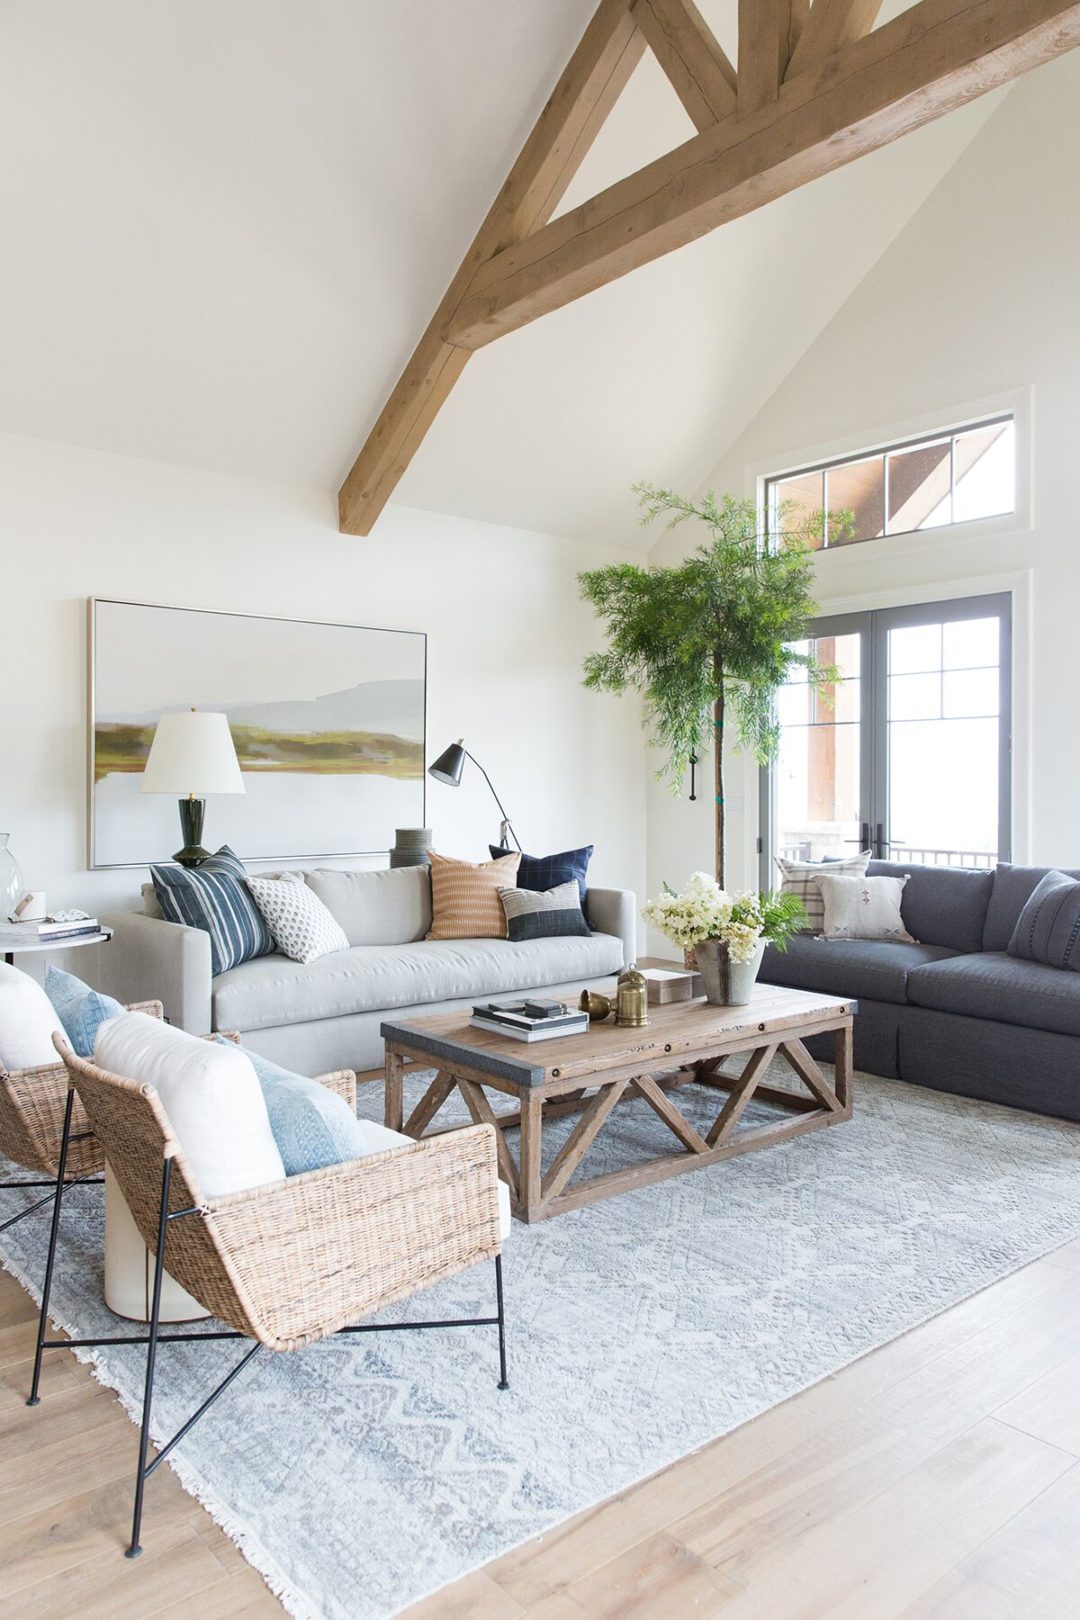 35+ Rustic living room ideas - modern, farmhouse and chic decor